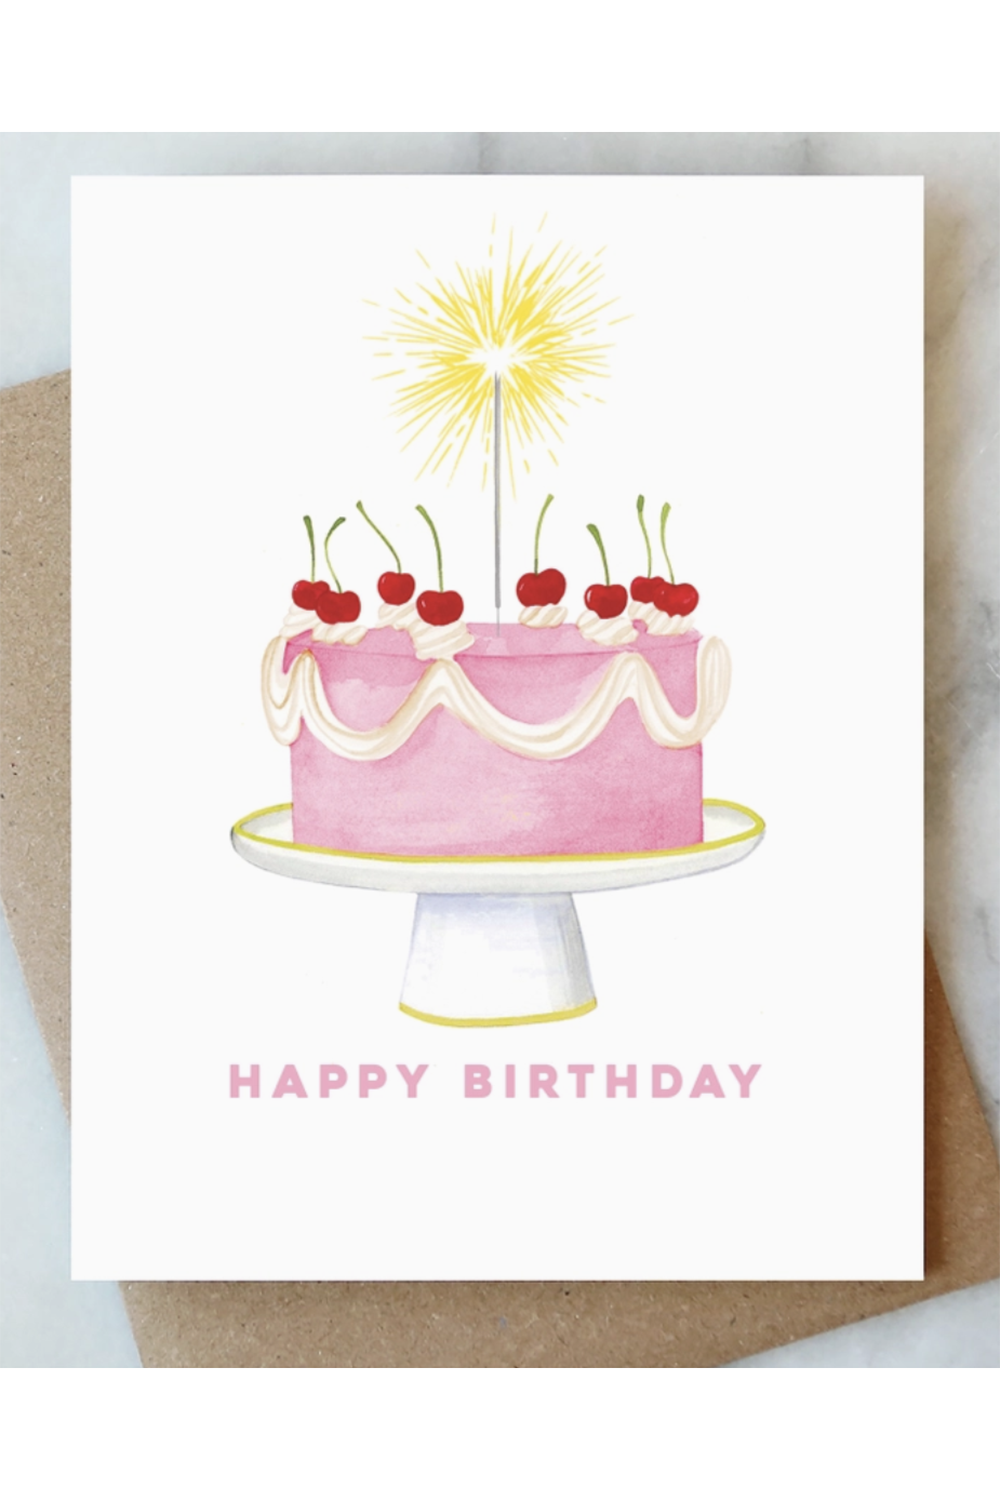 AJD Birthday Card - Sparkler Cake